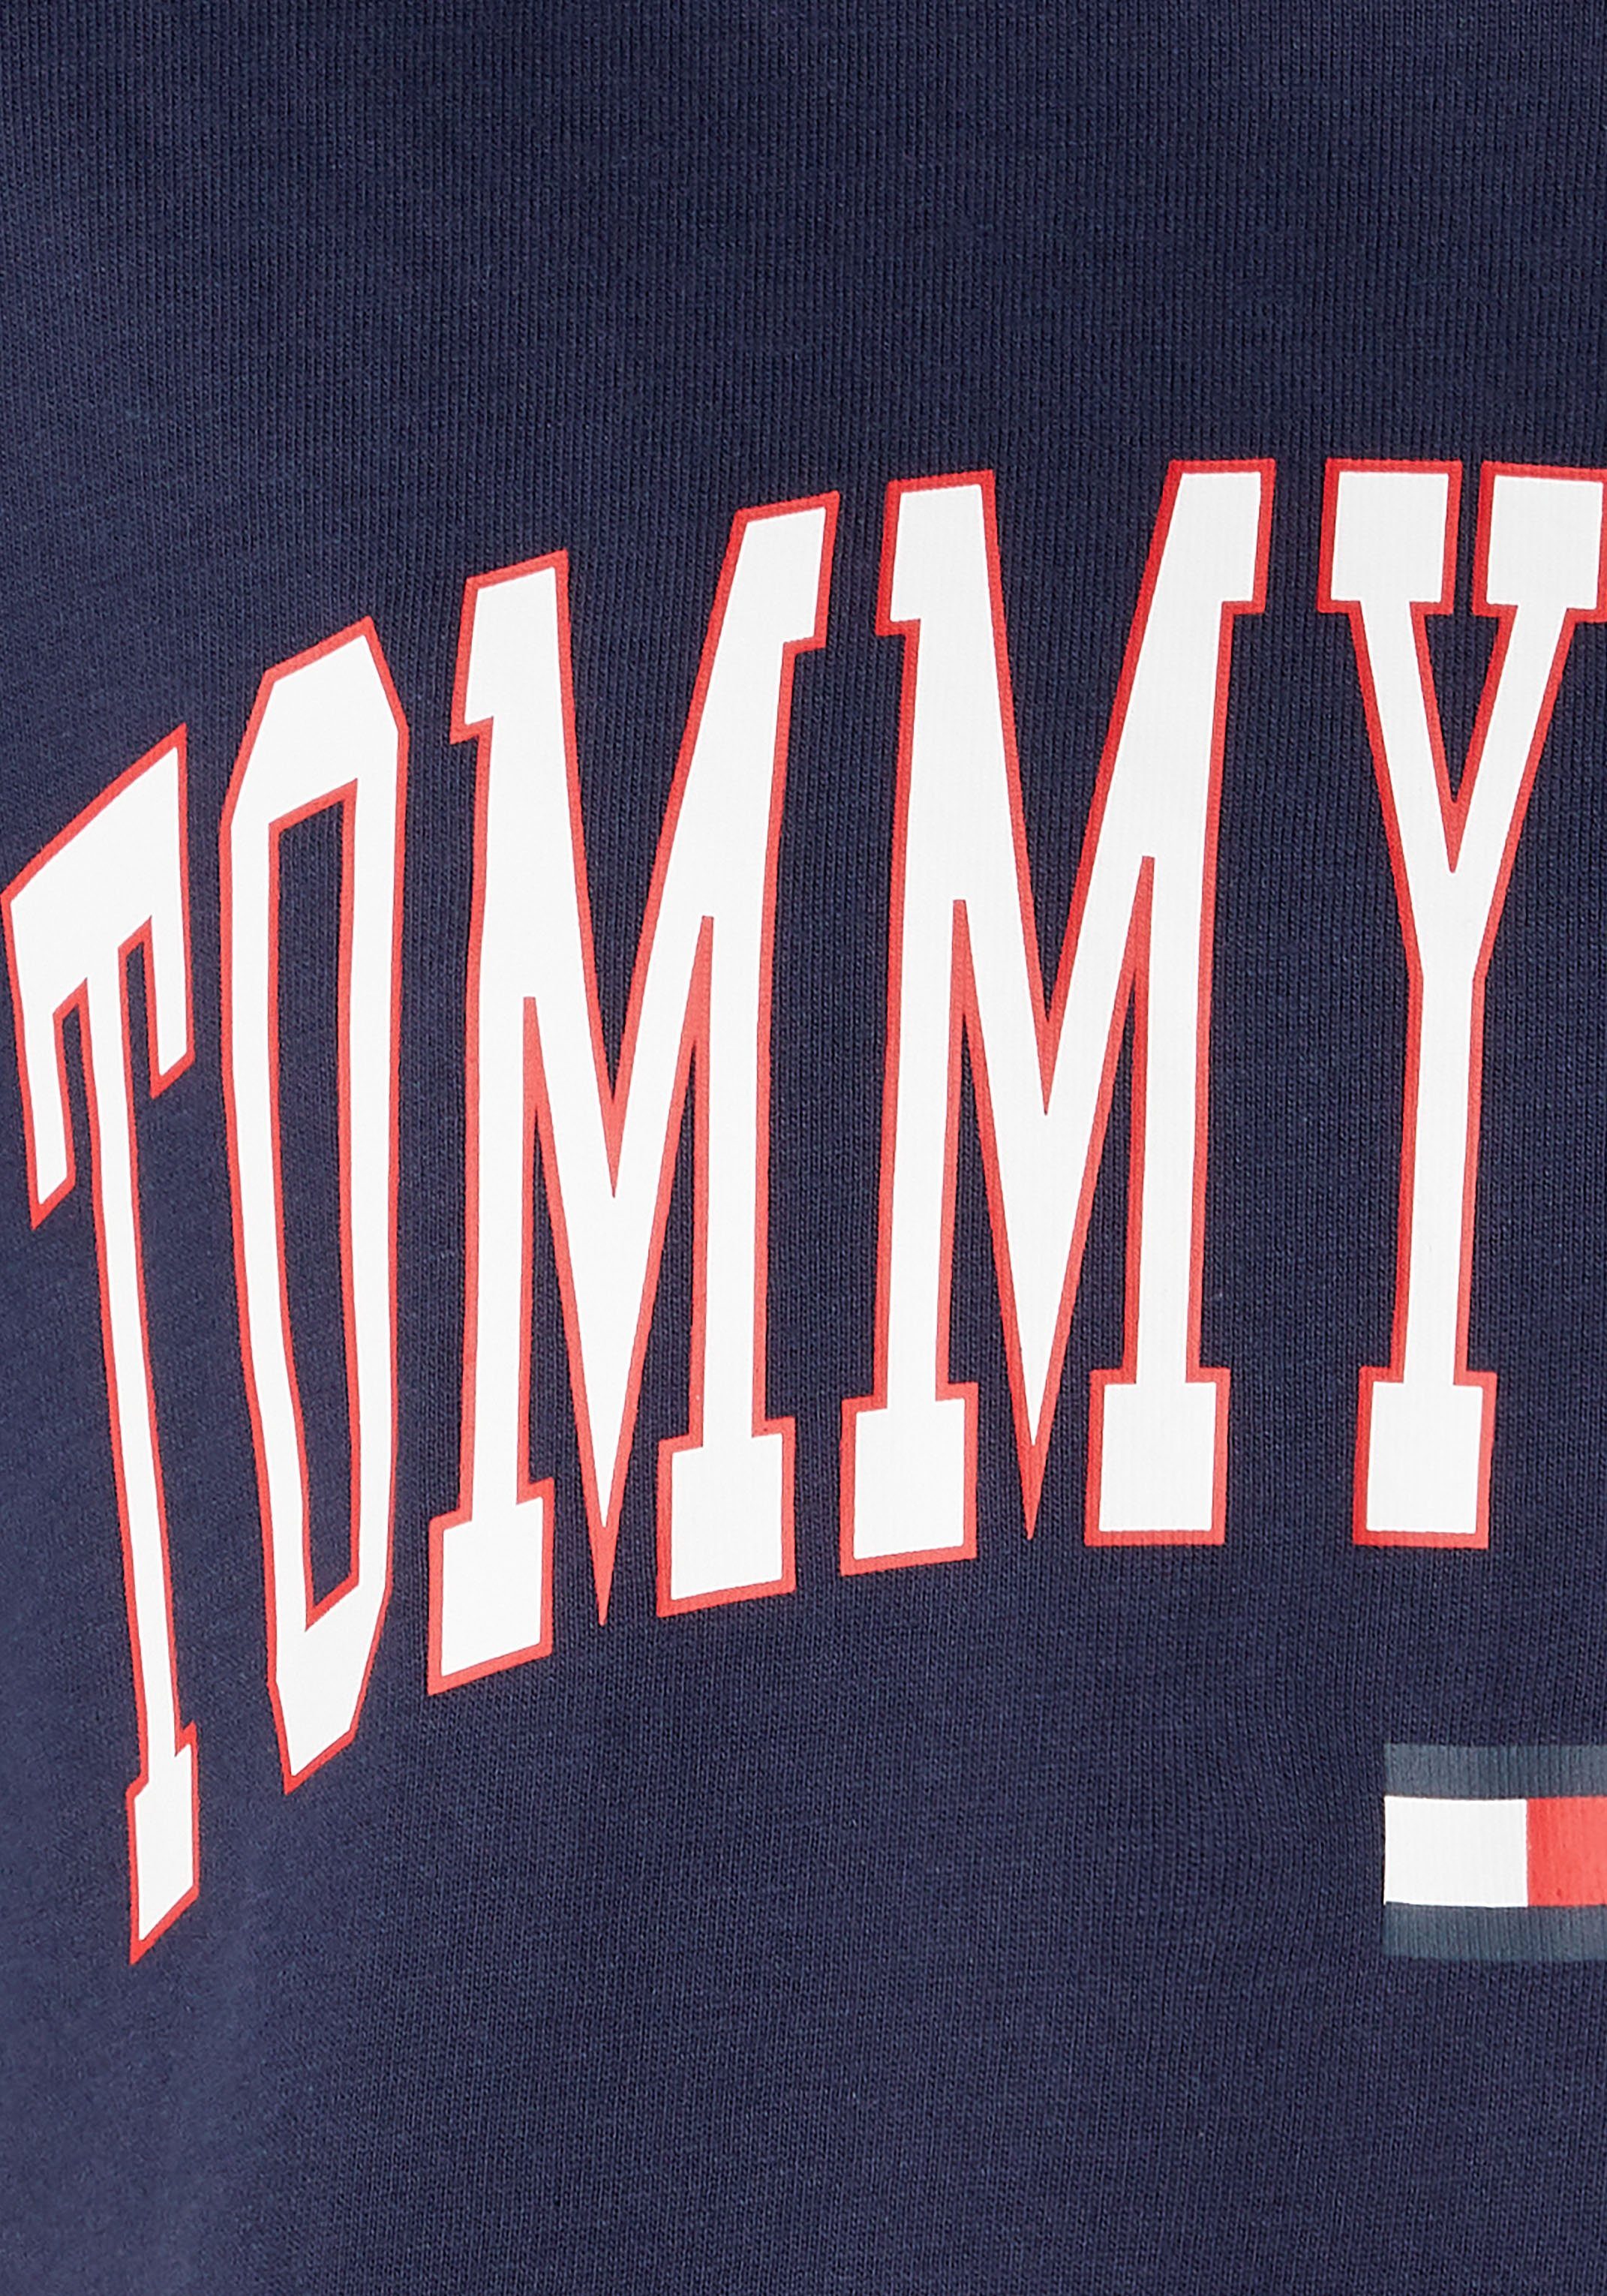 Tommy Navy Jeans Twilight T-Shirt COLLEGIATE TEE TJM CLASSIC